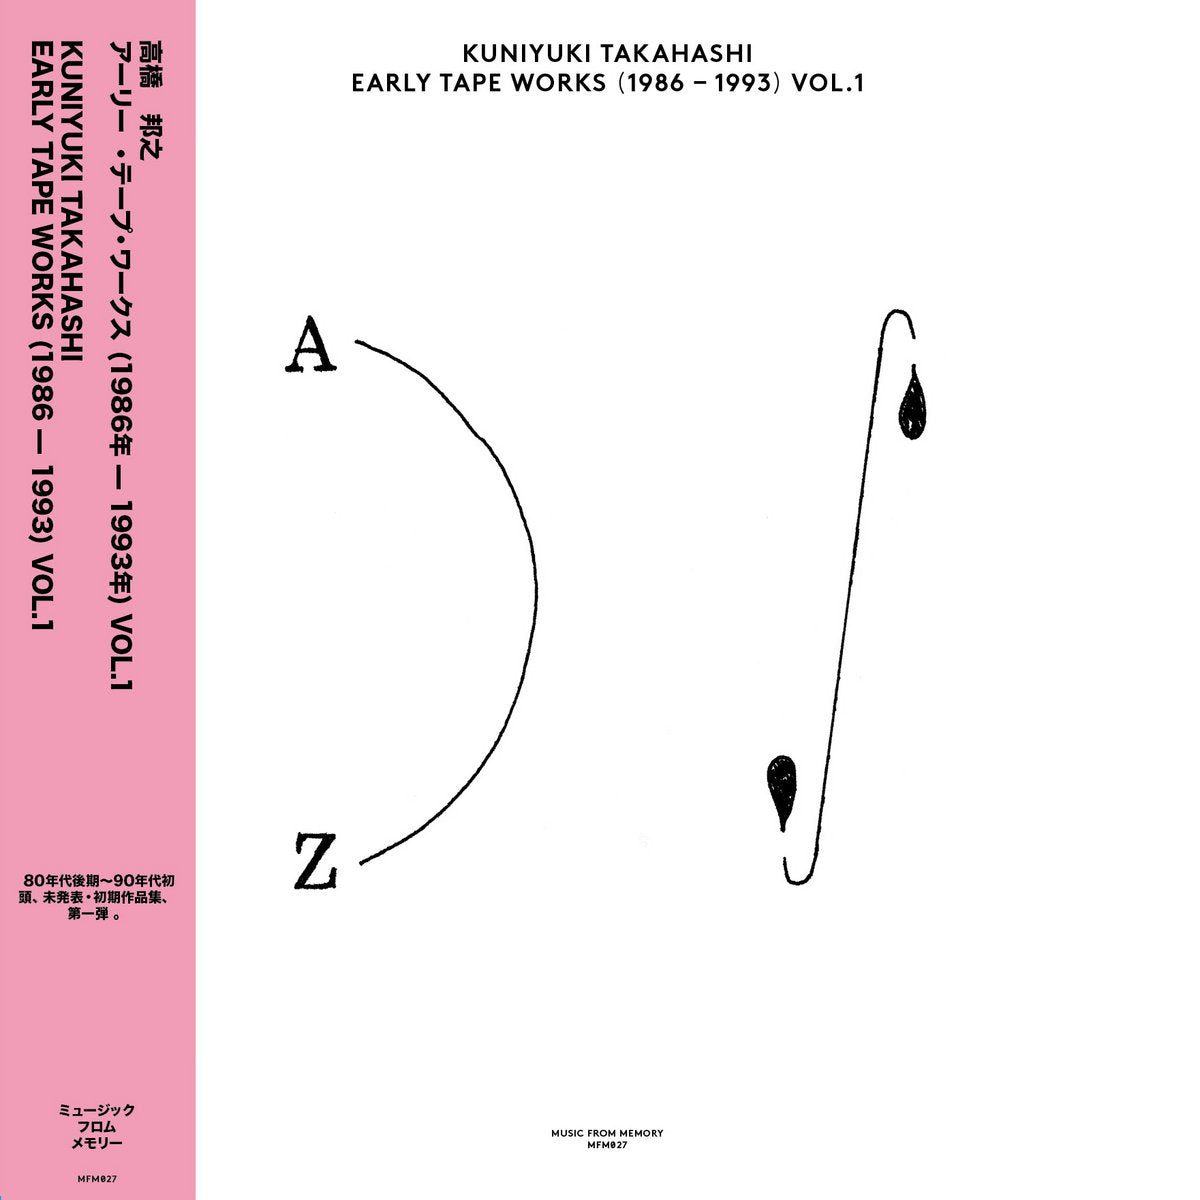 Kuniyuki Takahashi - Early Tape Works (1986 - 1993) Vol. 1